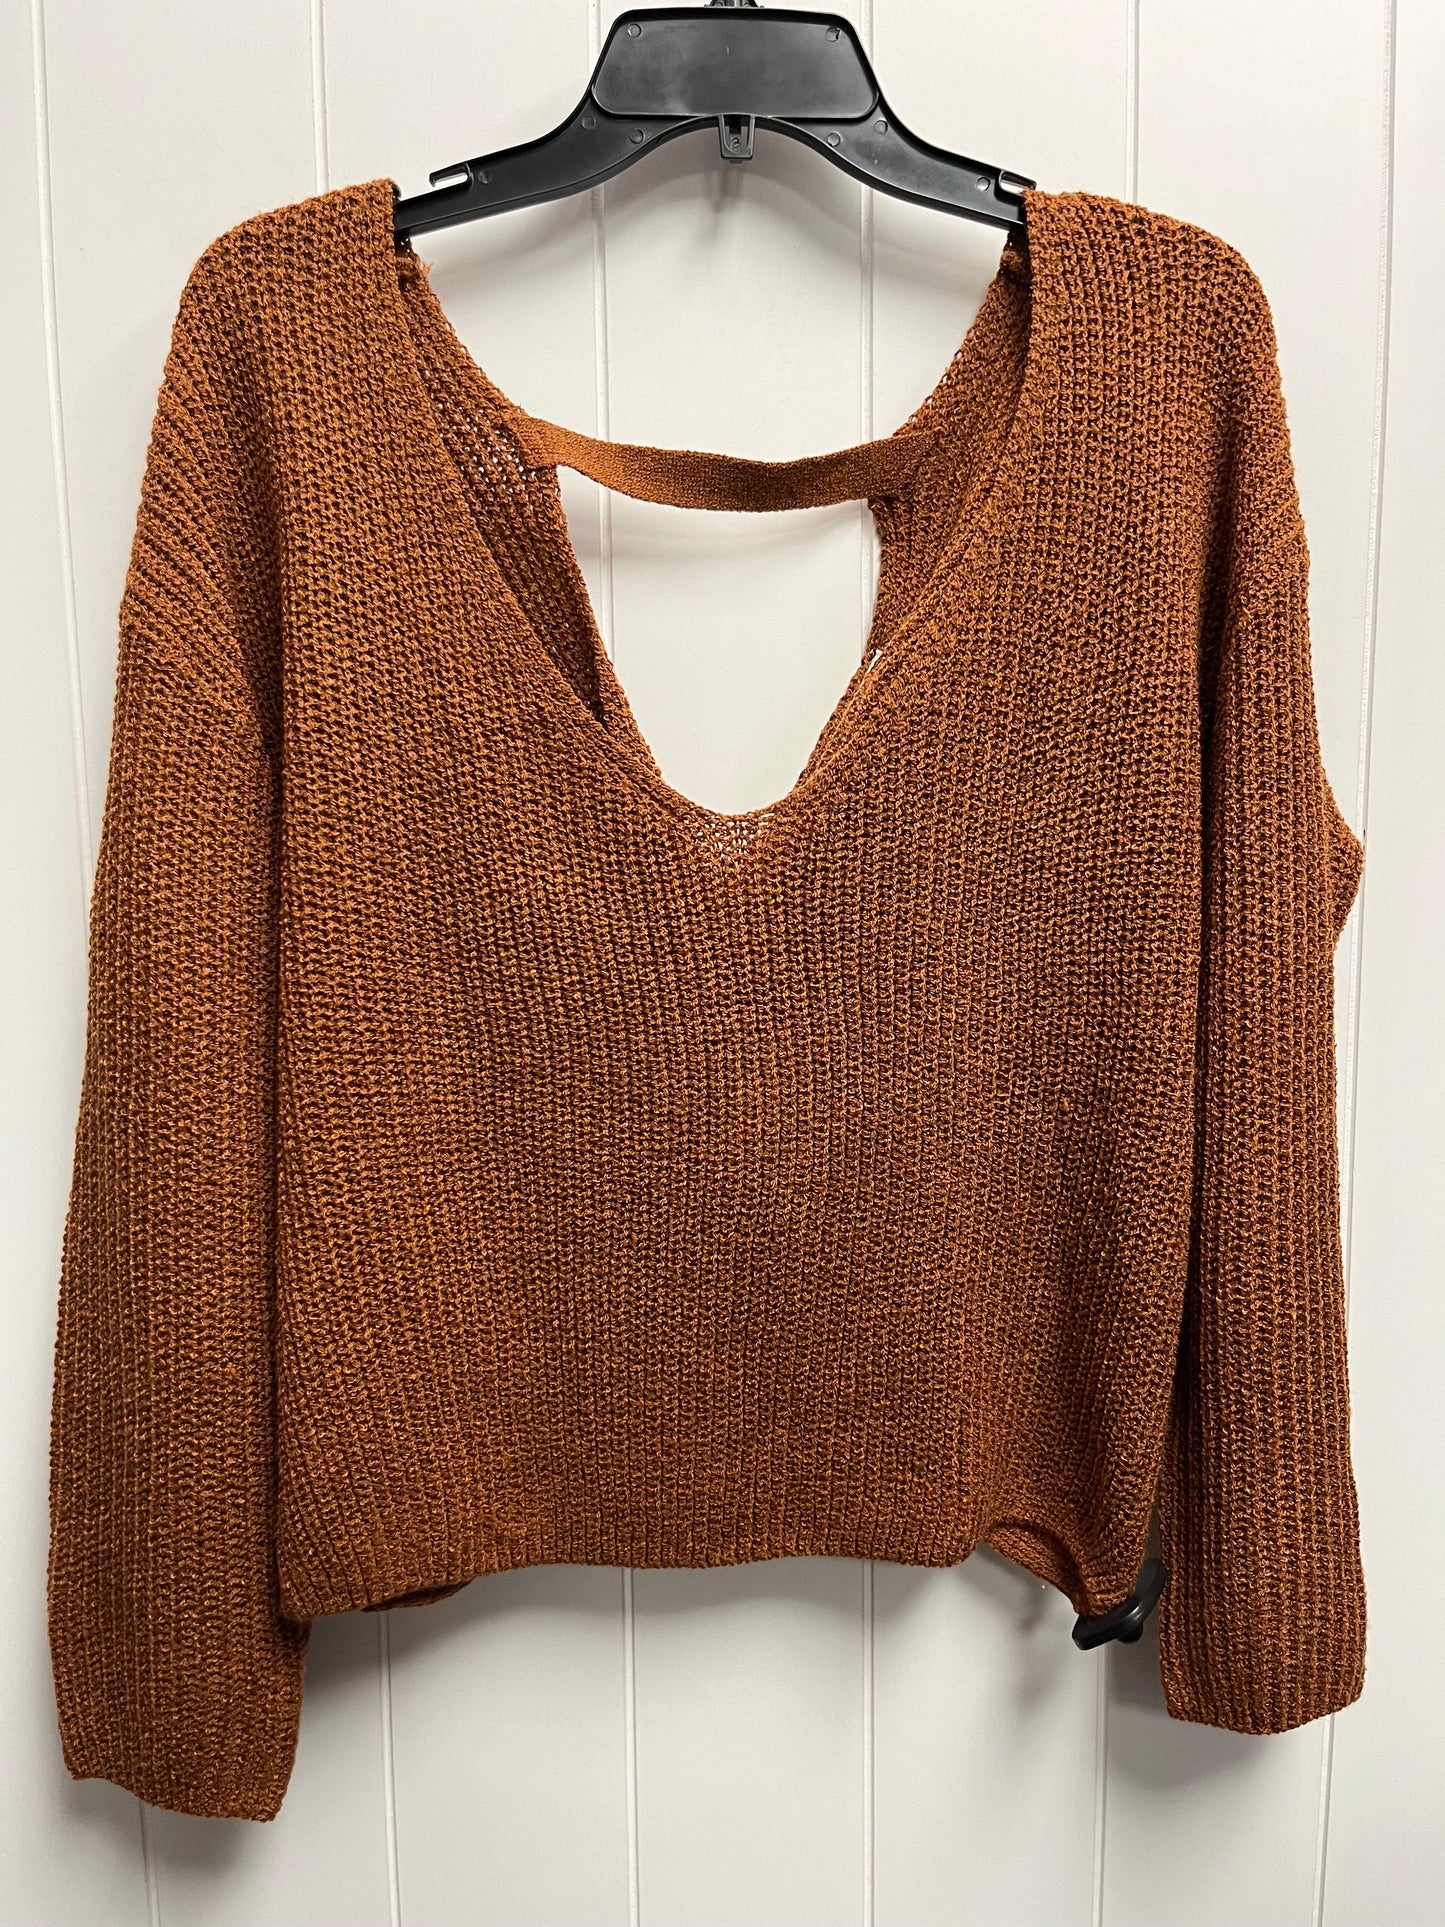 Sweater By LUNIK  Size: M